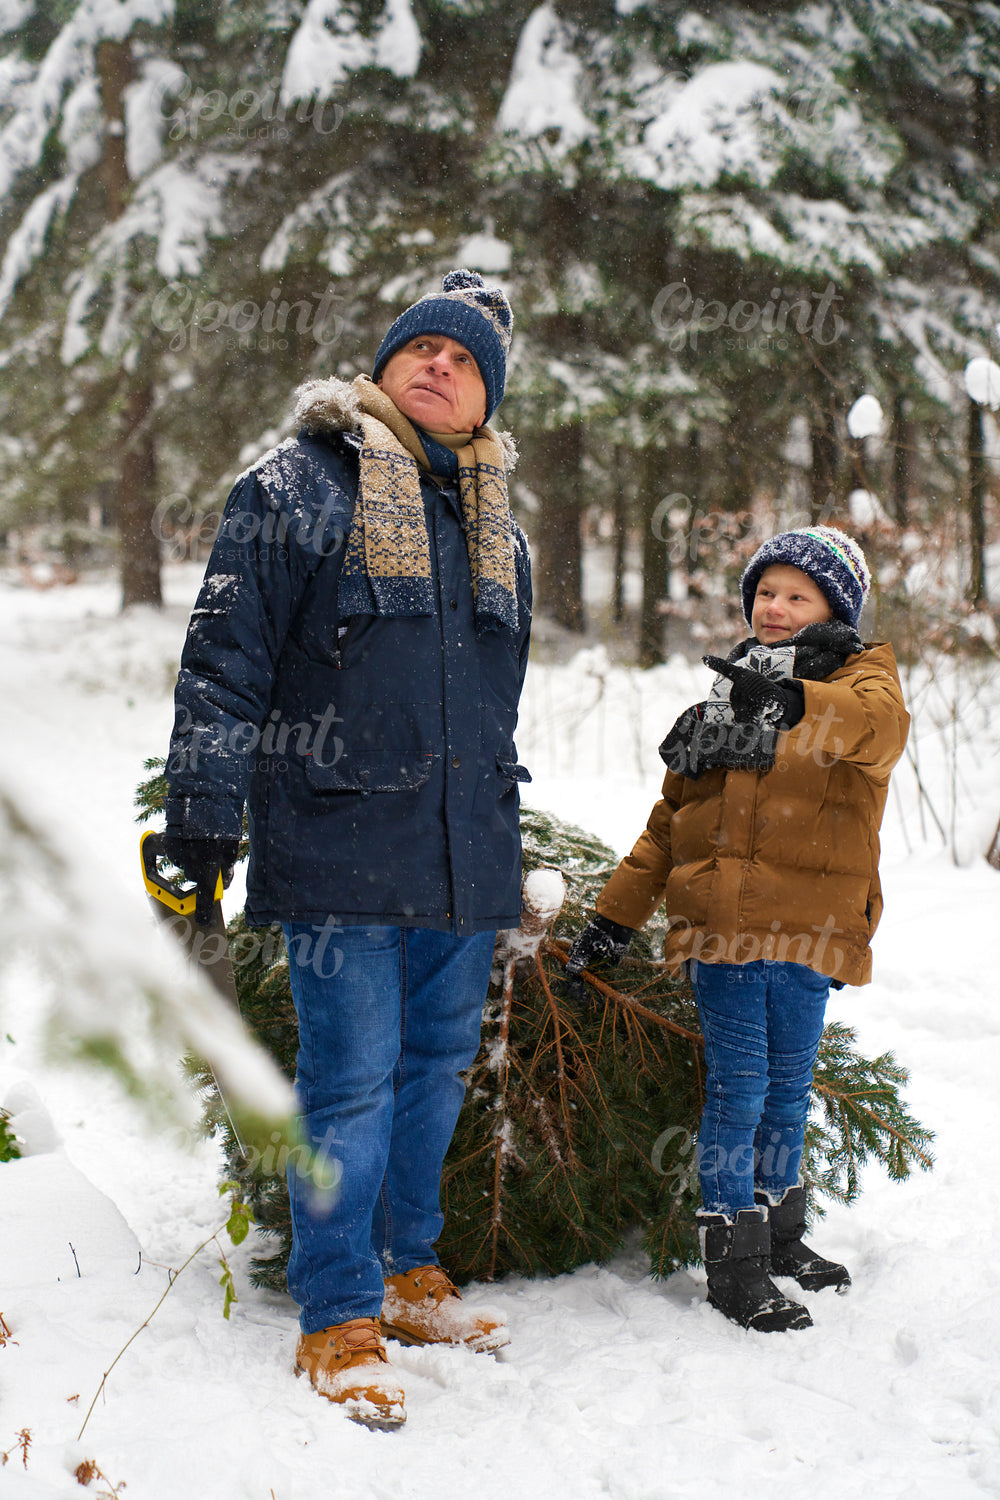 Preparing Christmas tree with grandpa